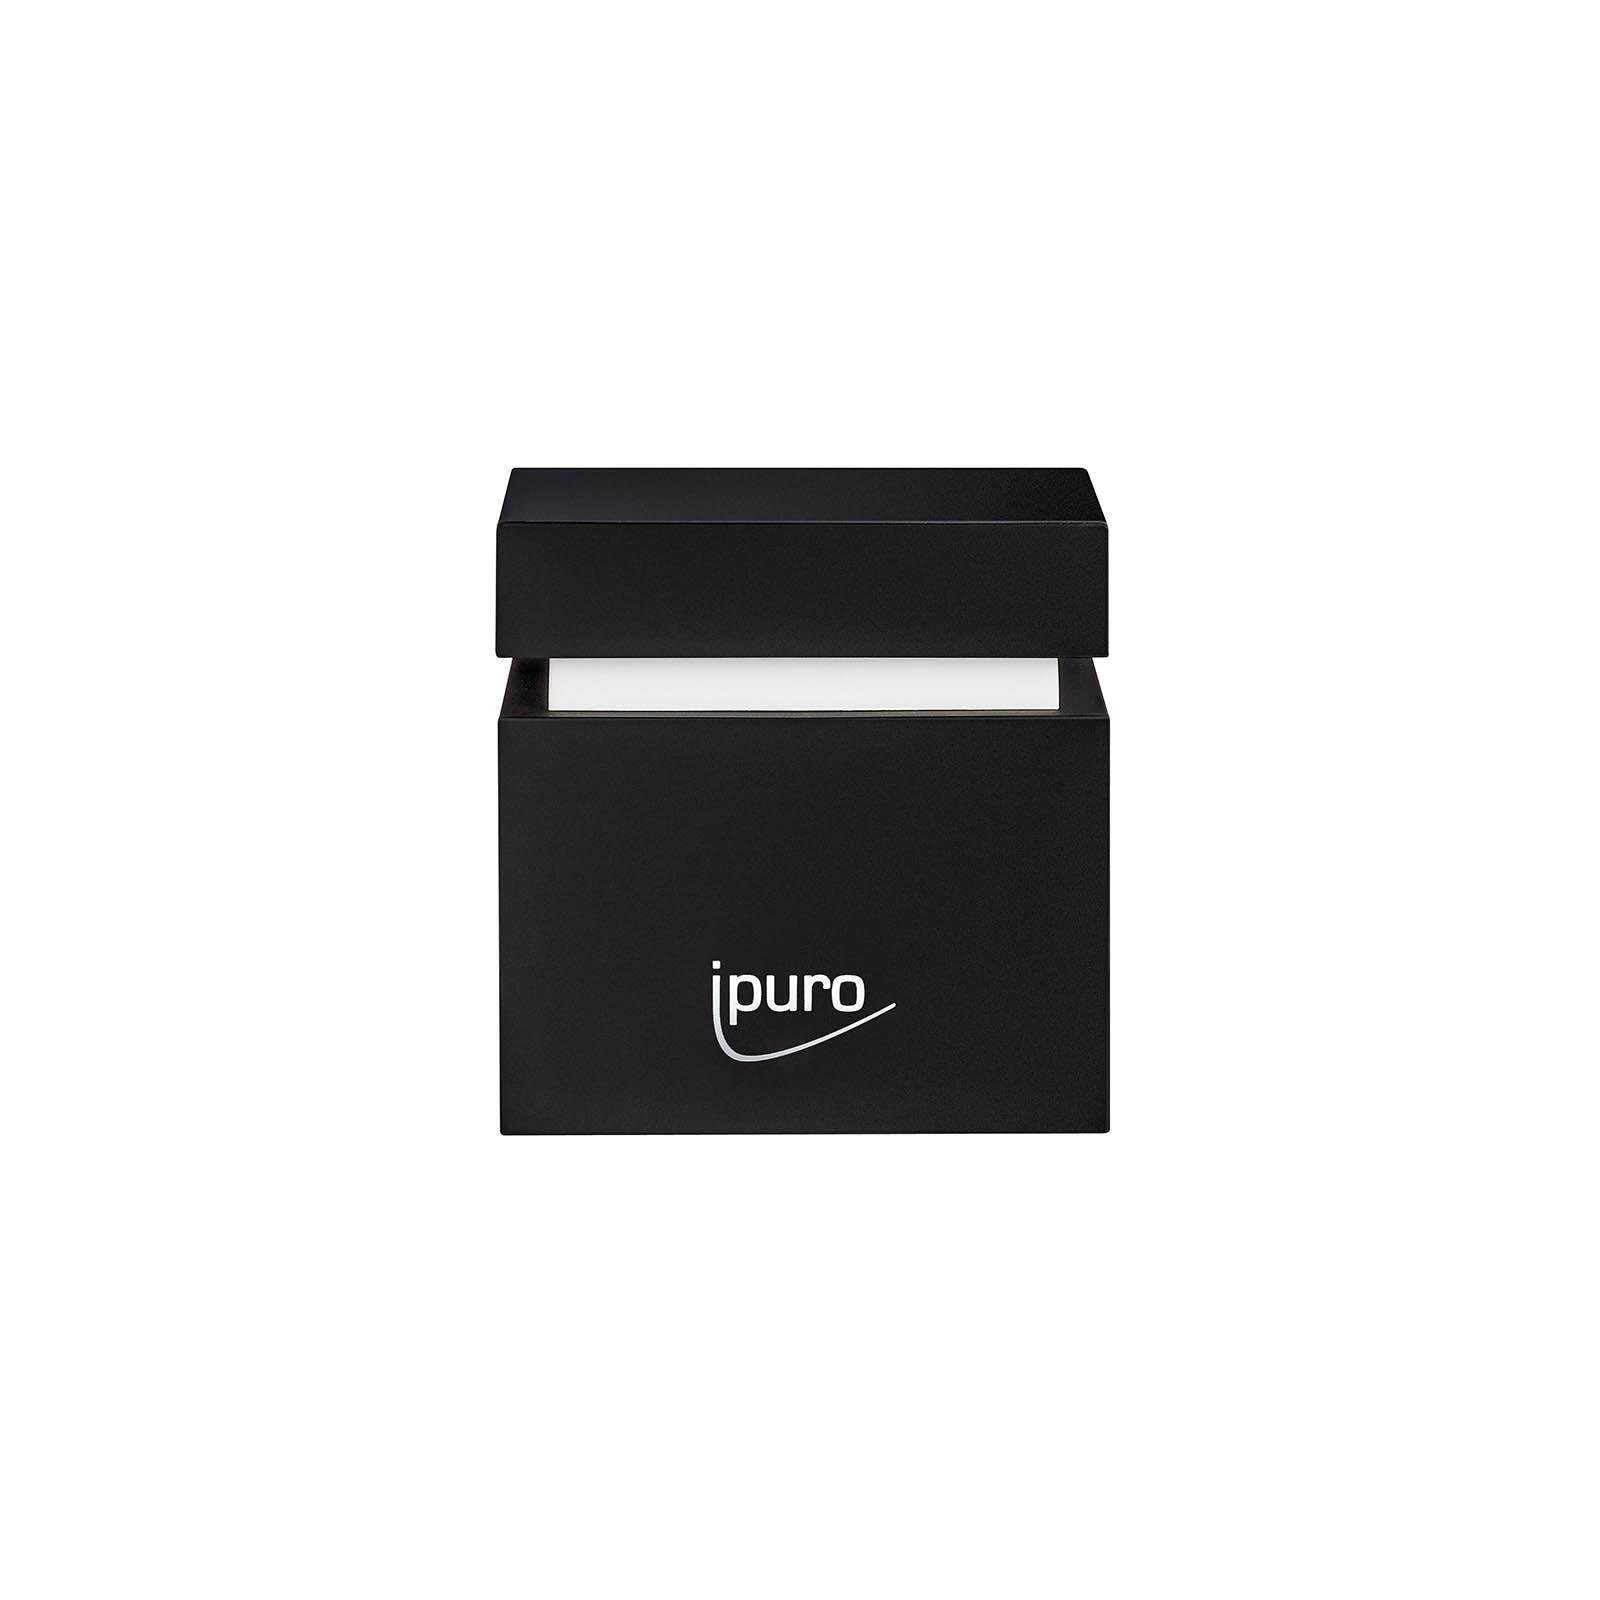 IPURO Duftlampe Elektrischer Aroma-Diffusor 5.5 Stück Aroma-Diffusor Zentimeter Elektrischer Plug-in 1 Cube Cube), Zentimeter, T 9.3 1 5.5 St., B H Zentimeter, Aroma-Diffusor, Plug-in (Packung, aus